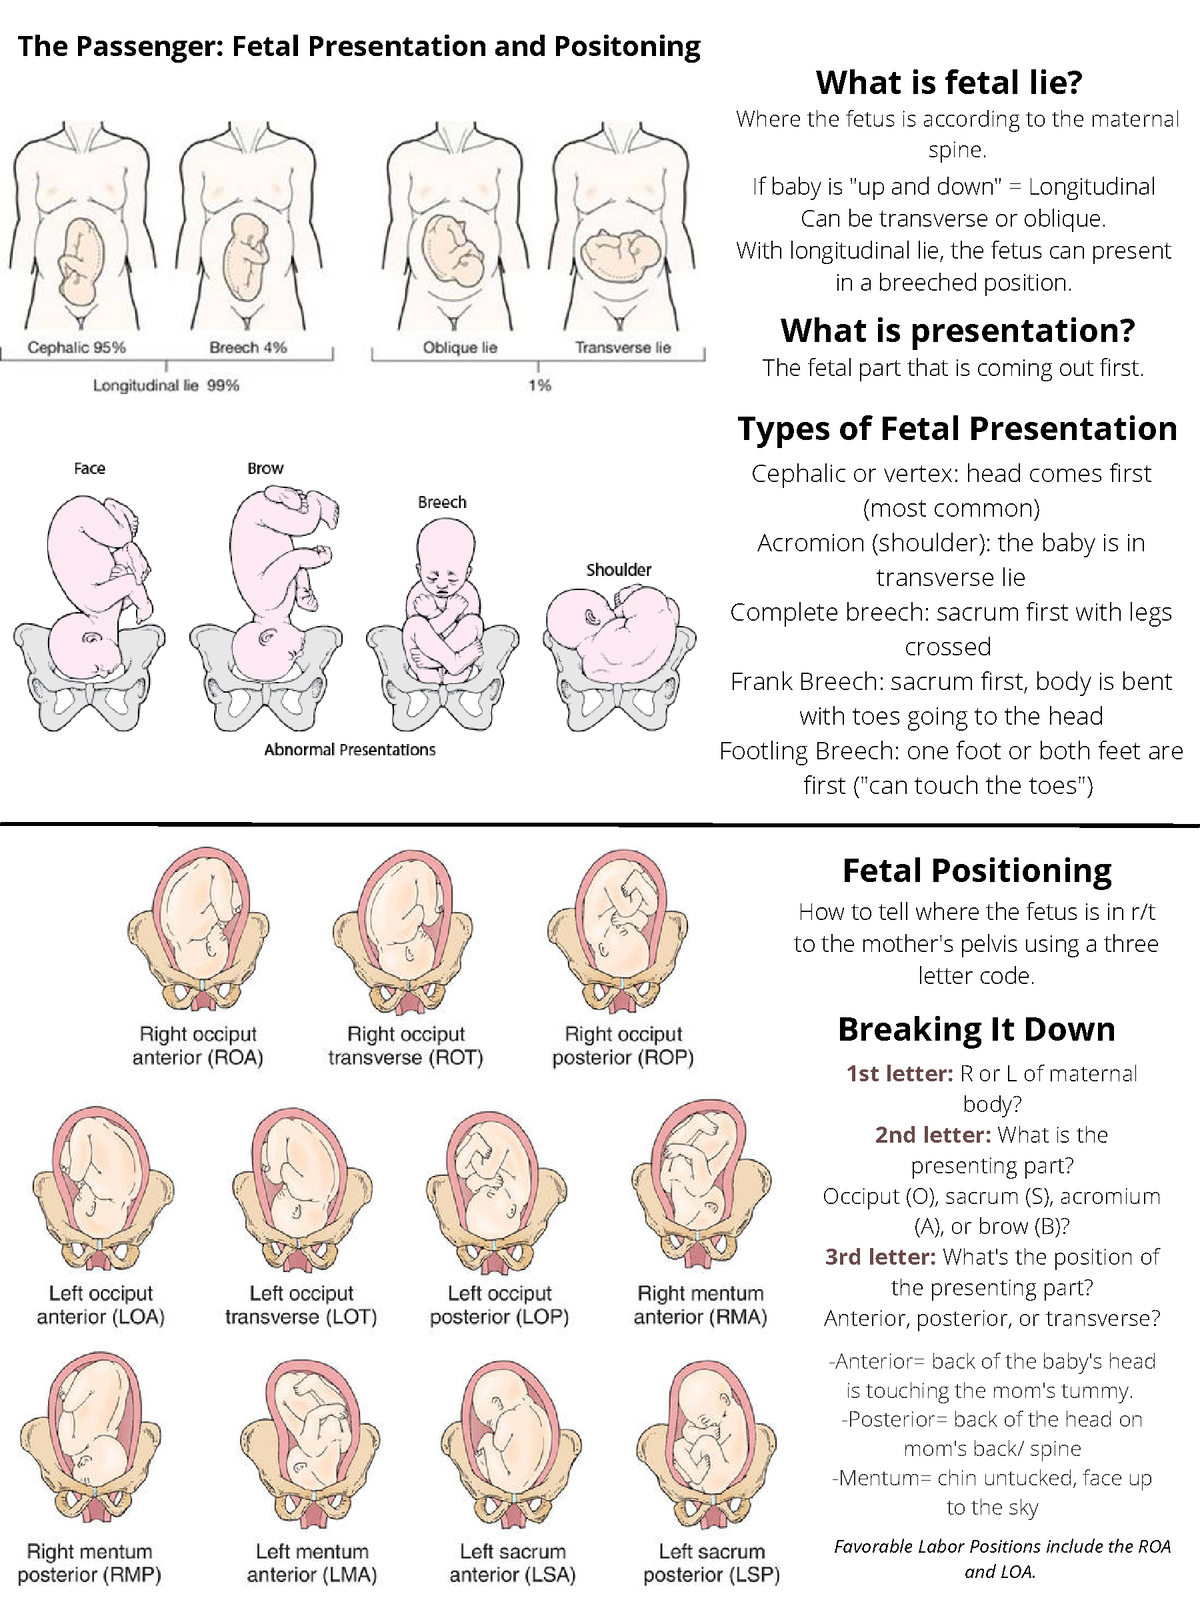 presentation means fetus